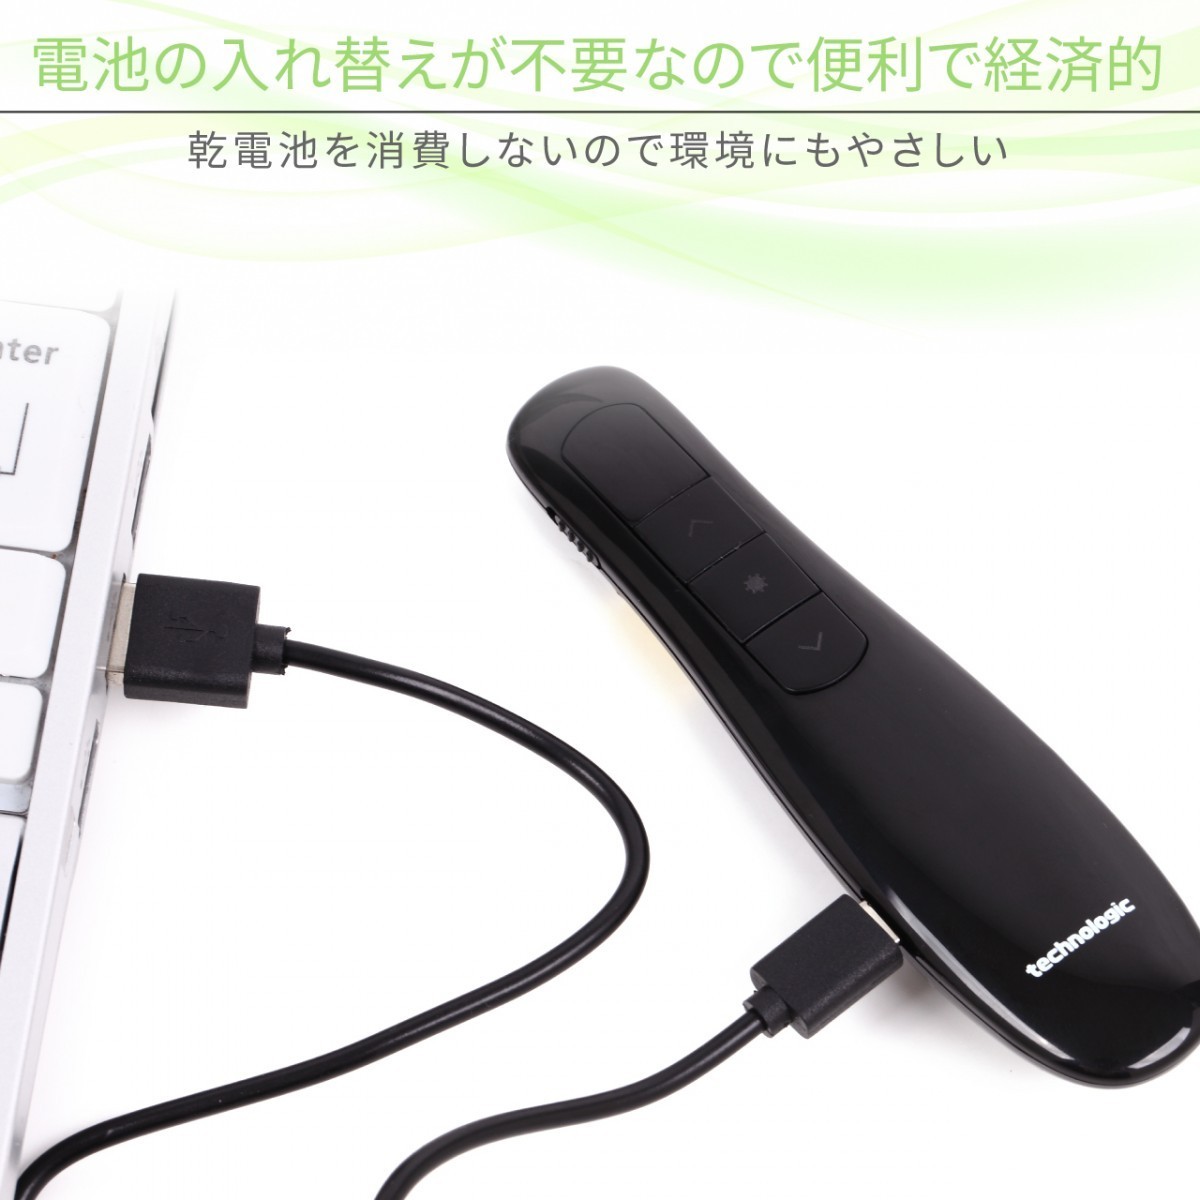  laser pointer powerful stylish wireless presenter battery . not charge Laser pre zen presentation USB rechargeable wireless 